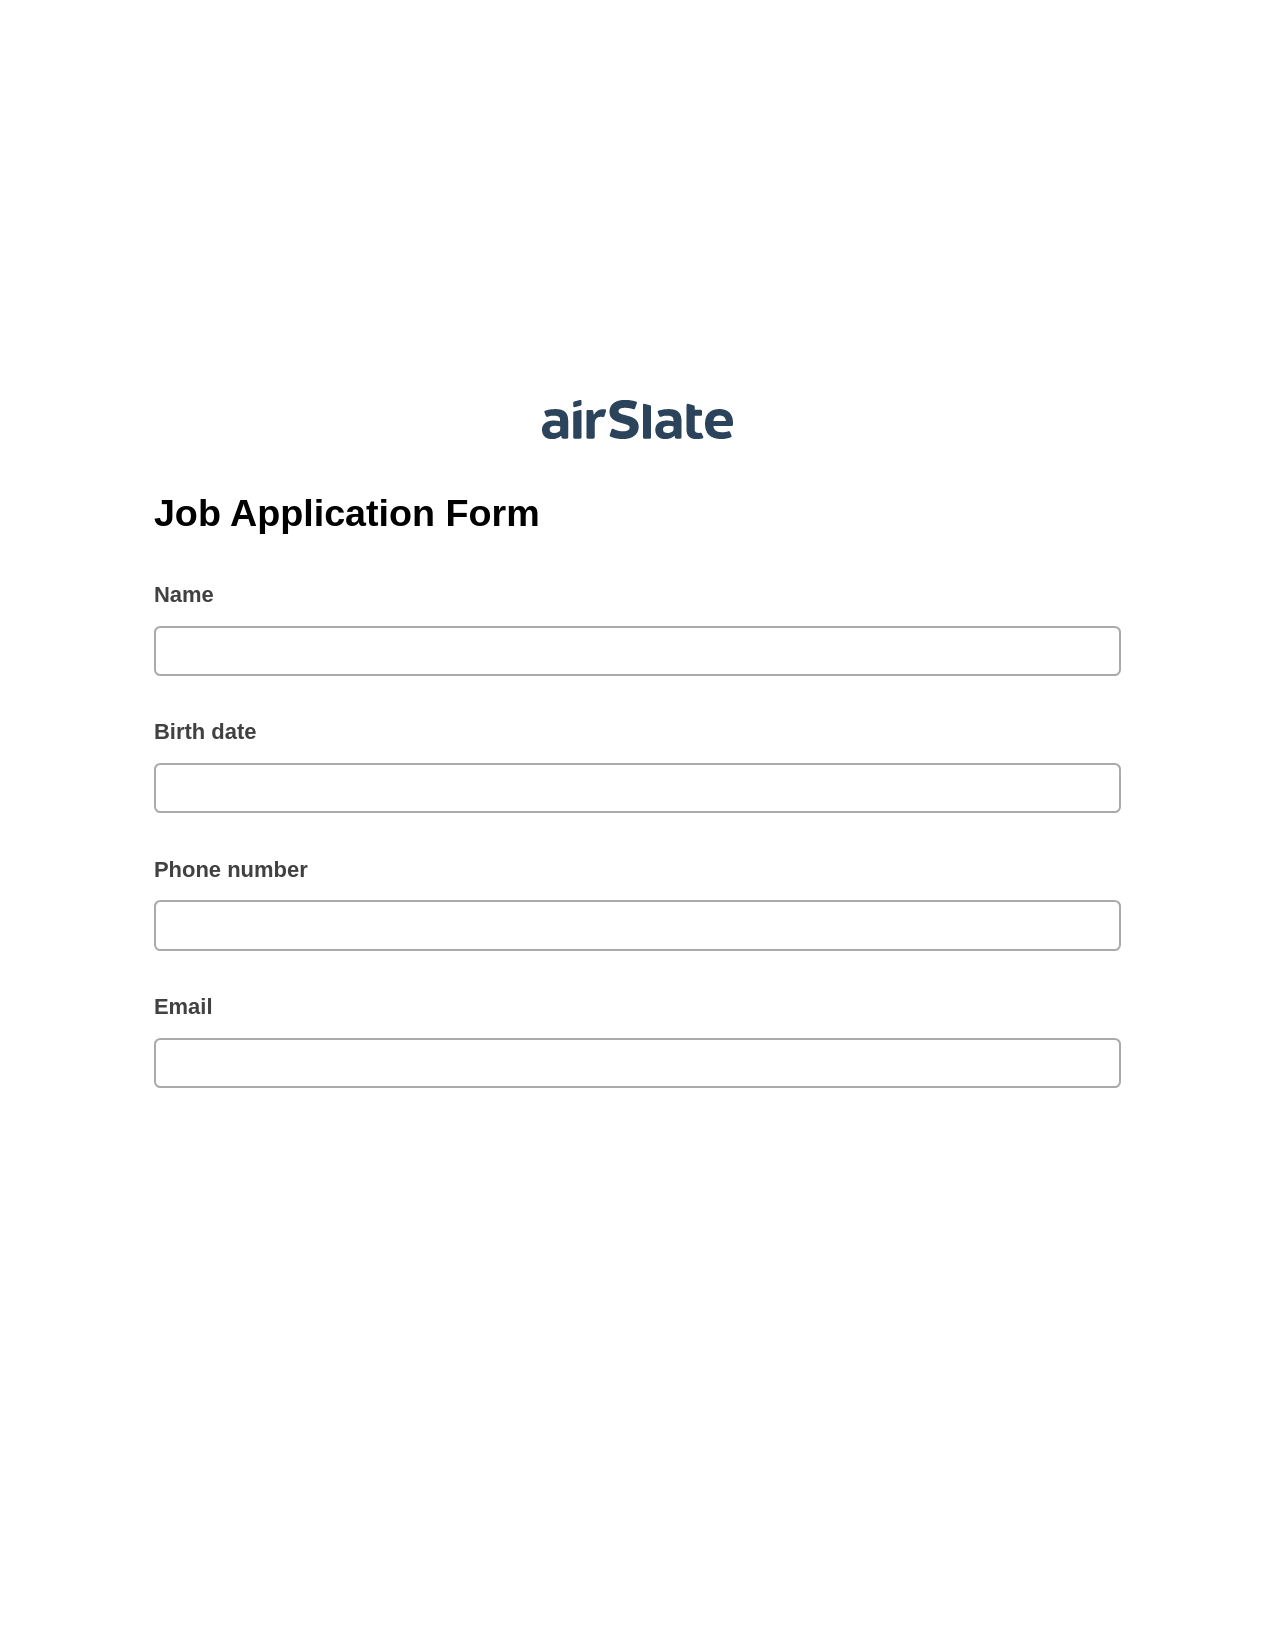 Job Application Form Pre-fill Document Bot, Google Sheet Two-Way Binding Bot, Post-finish Document Bot